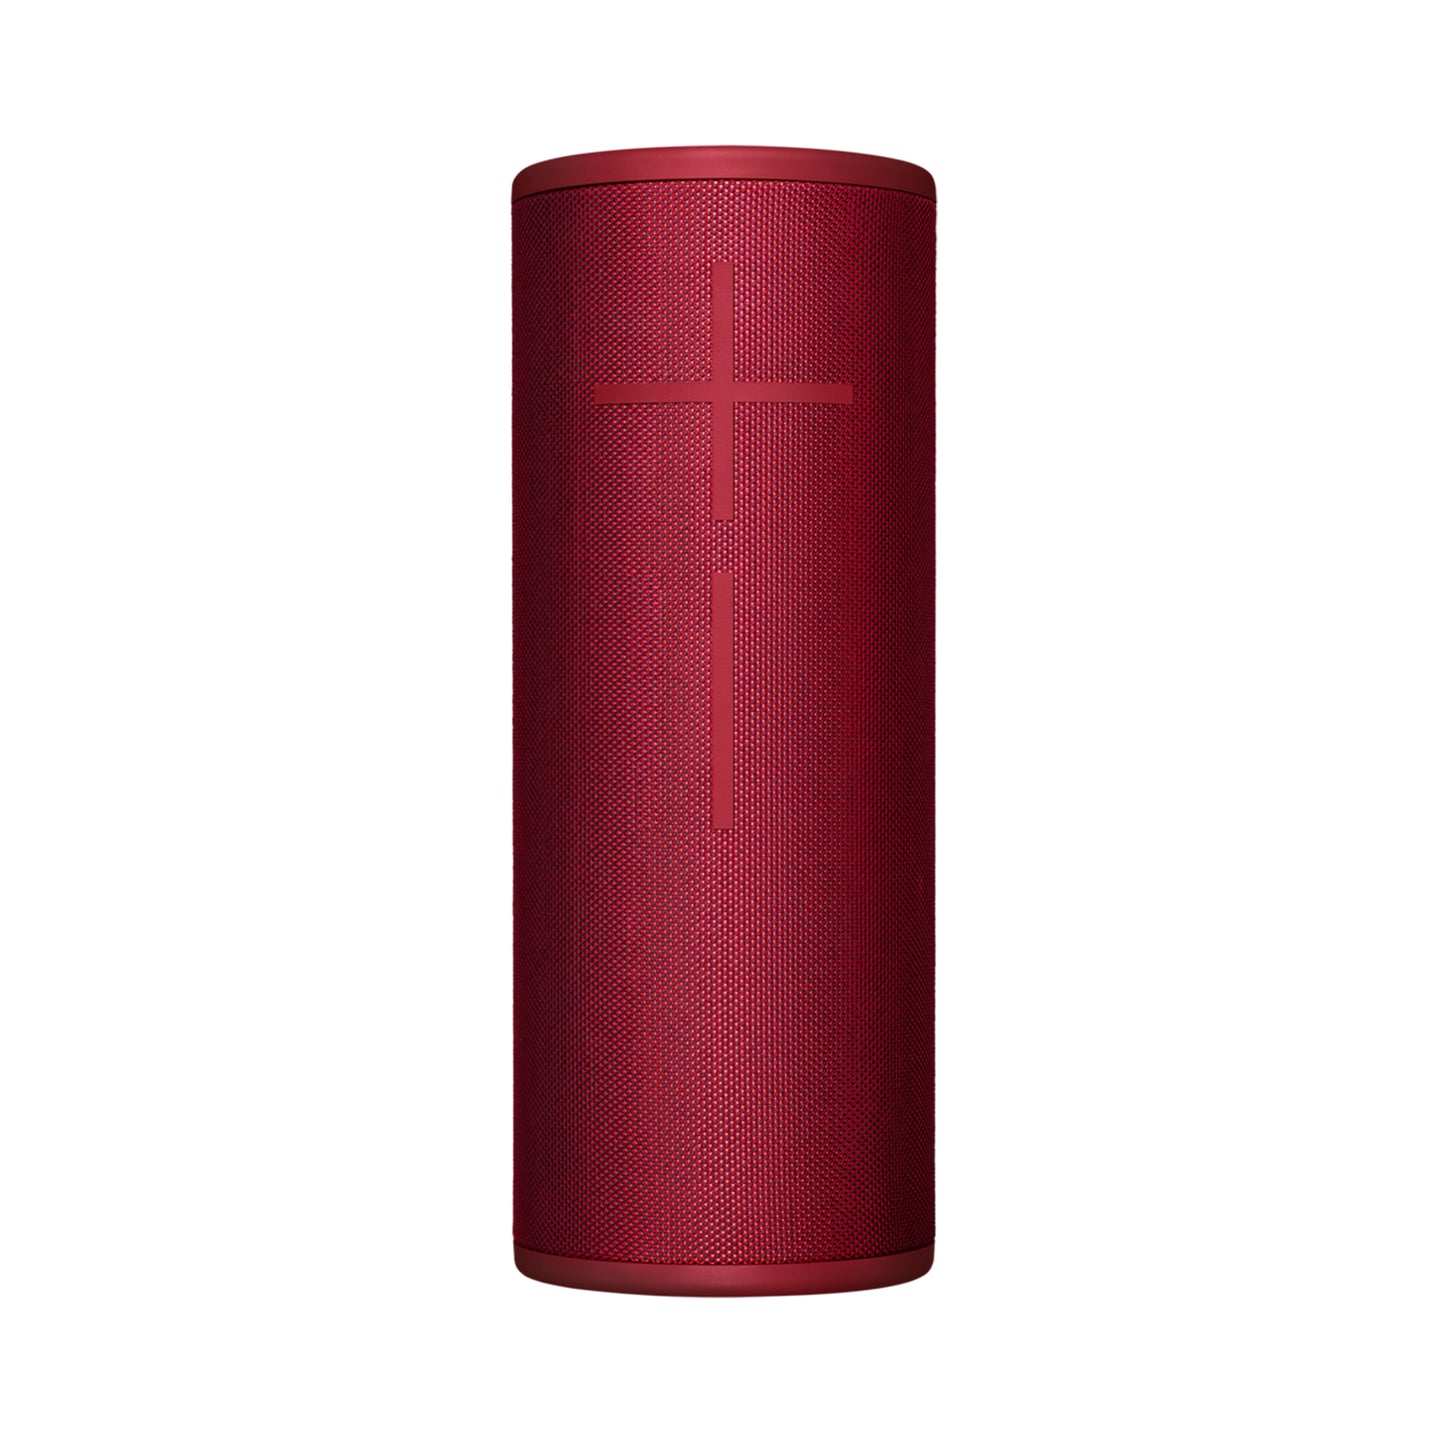 UE Megaboom 3 Wireless Portable Speaker - Sunset Red